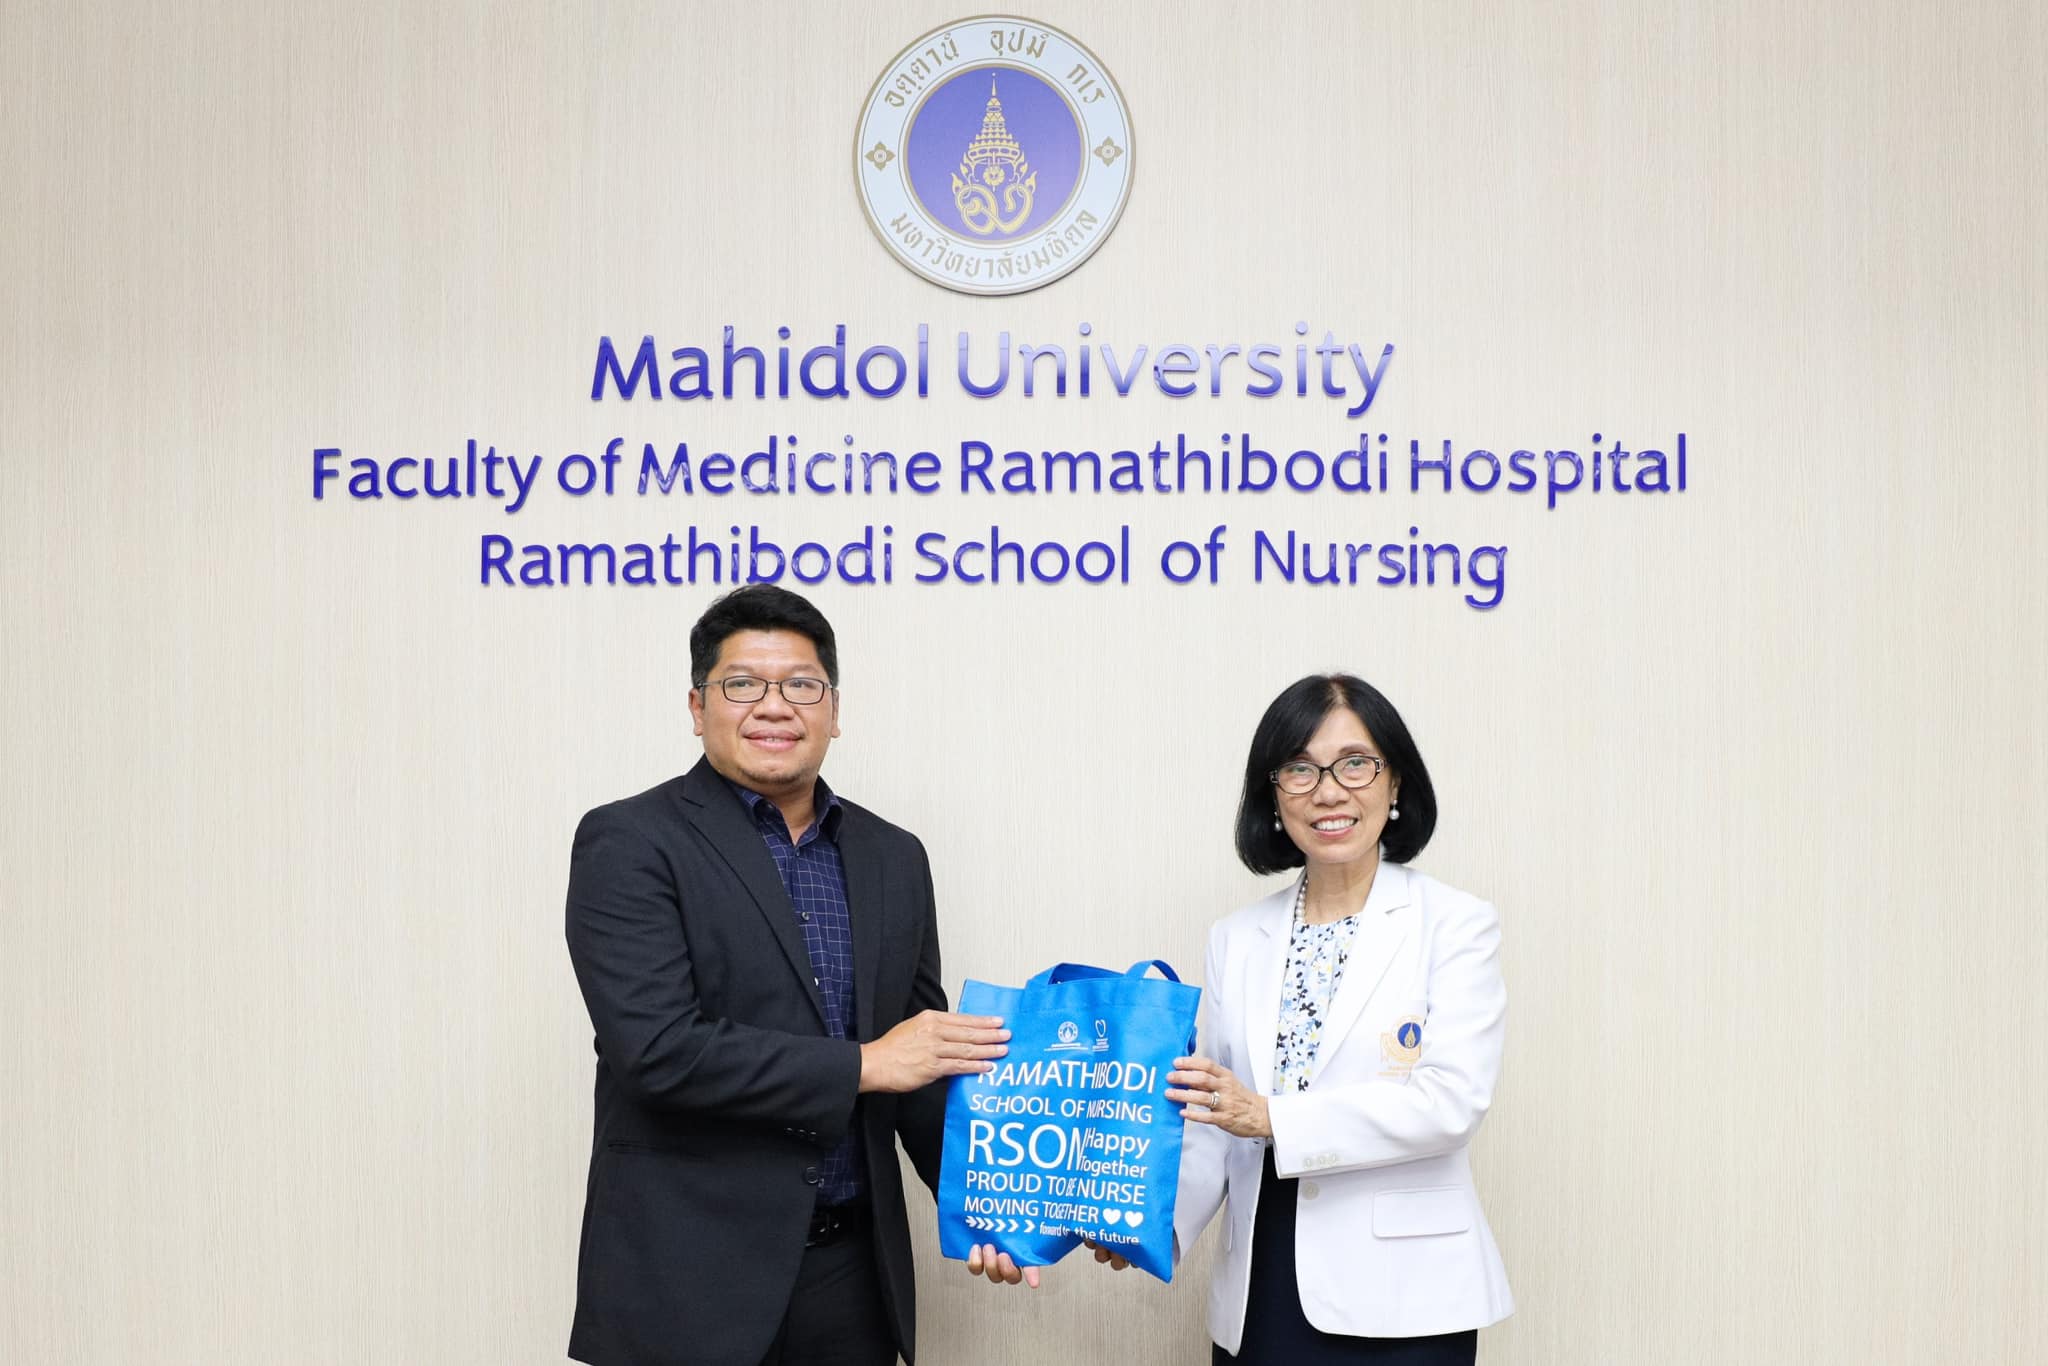 Ramathibodi School of Nursing, Faculty of Medicine Ramathibodi Hospital, Mahidol University, had a collaborative meeting with Faculty of Applied Science, King Mongkut's University of Technology North Bangkok (KMUTNB).